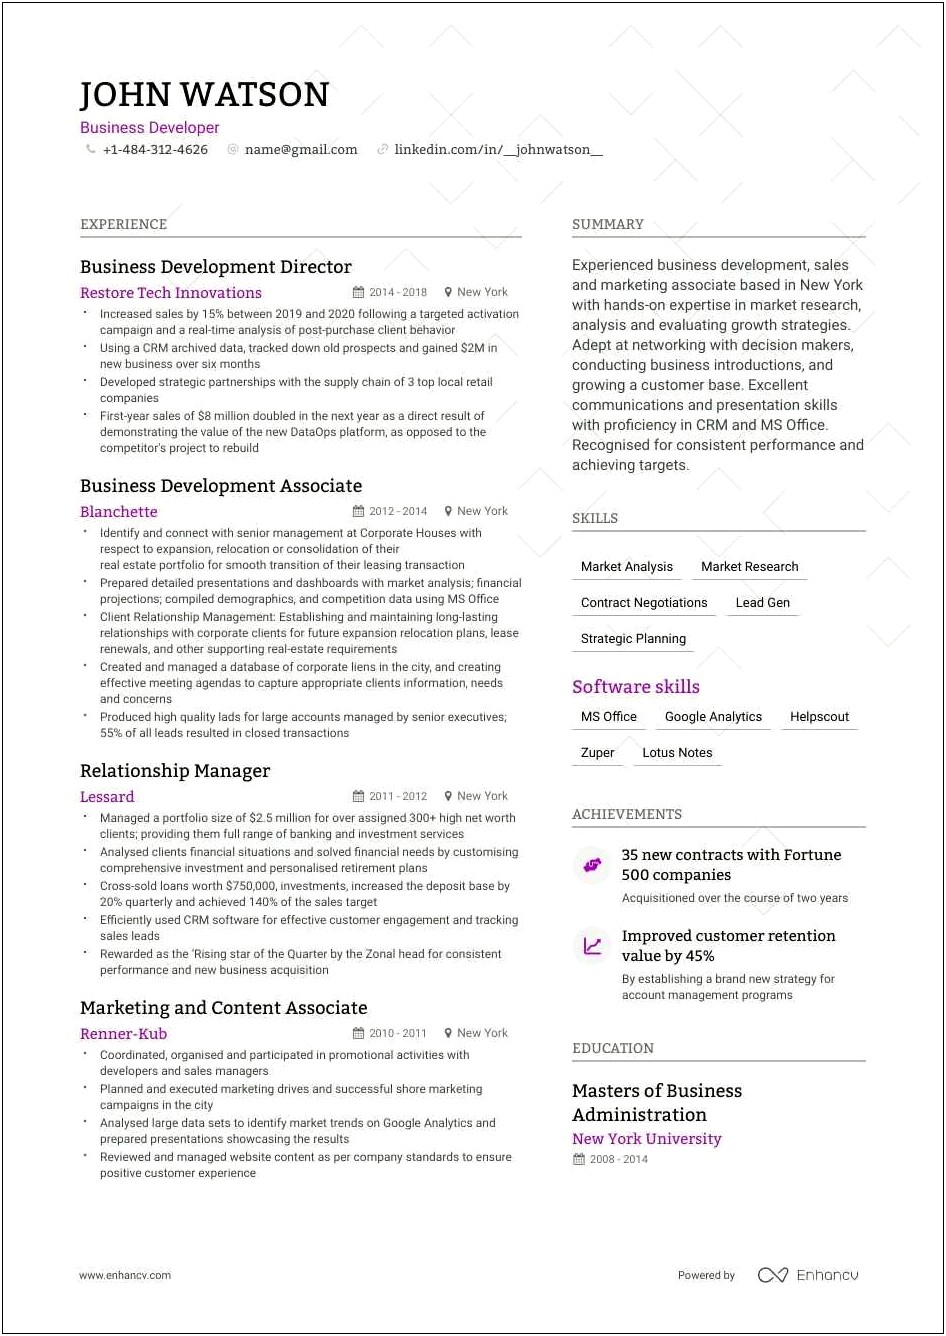 Management Skills Summary For Resume